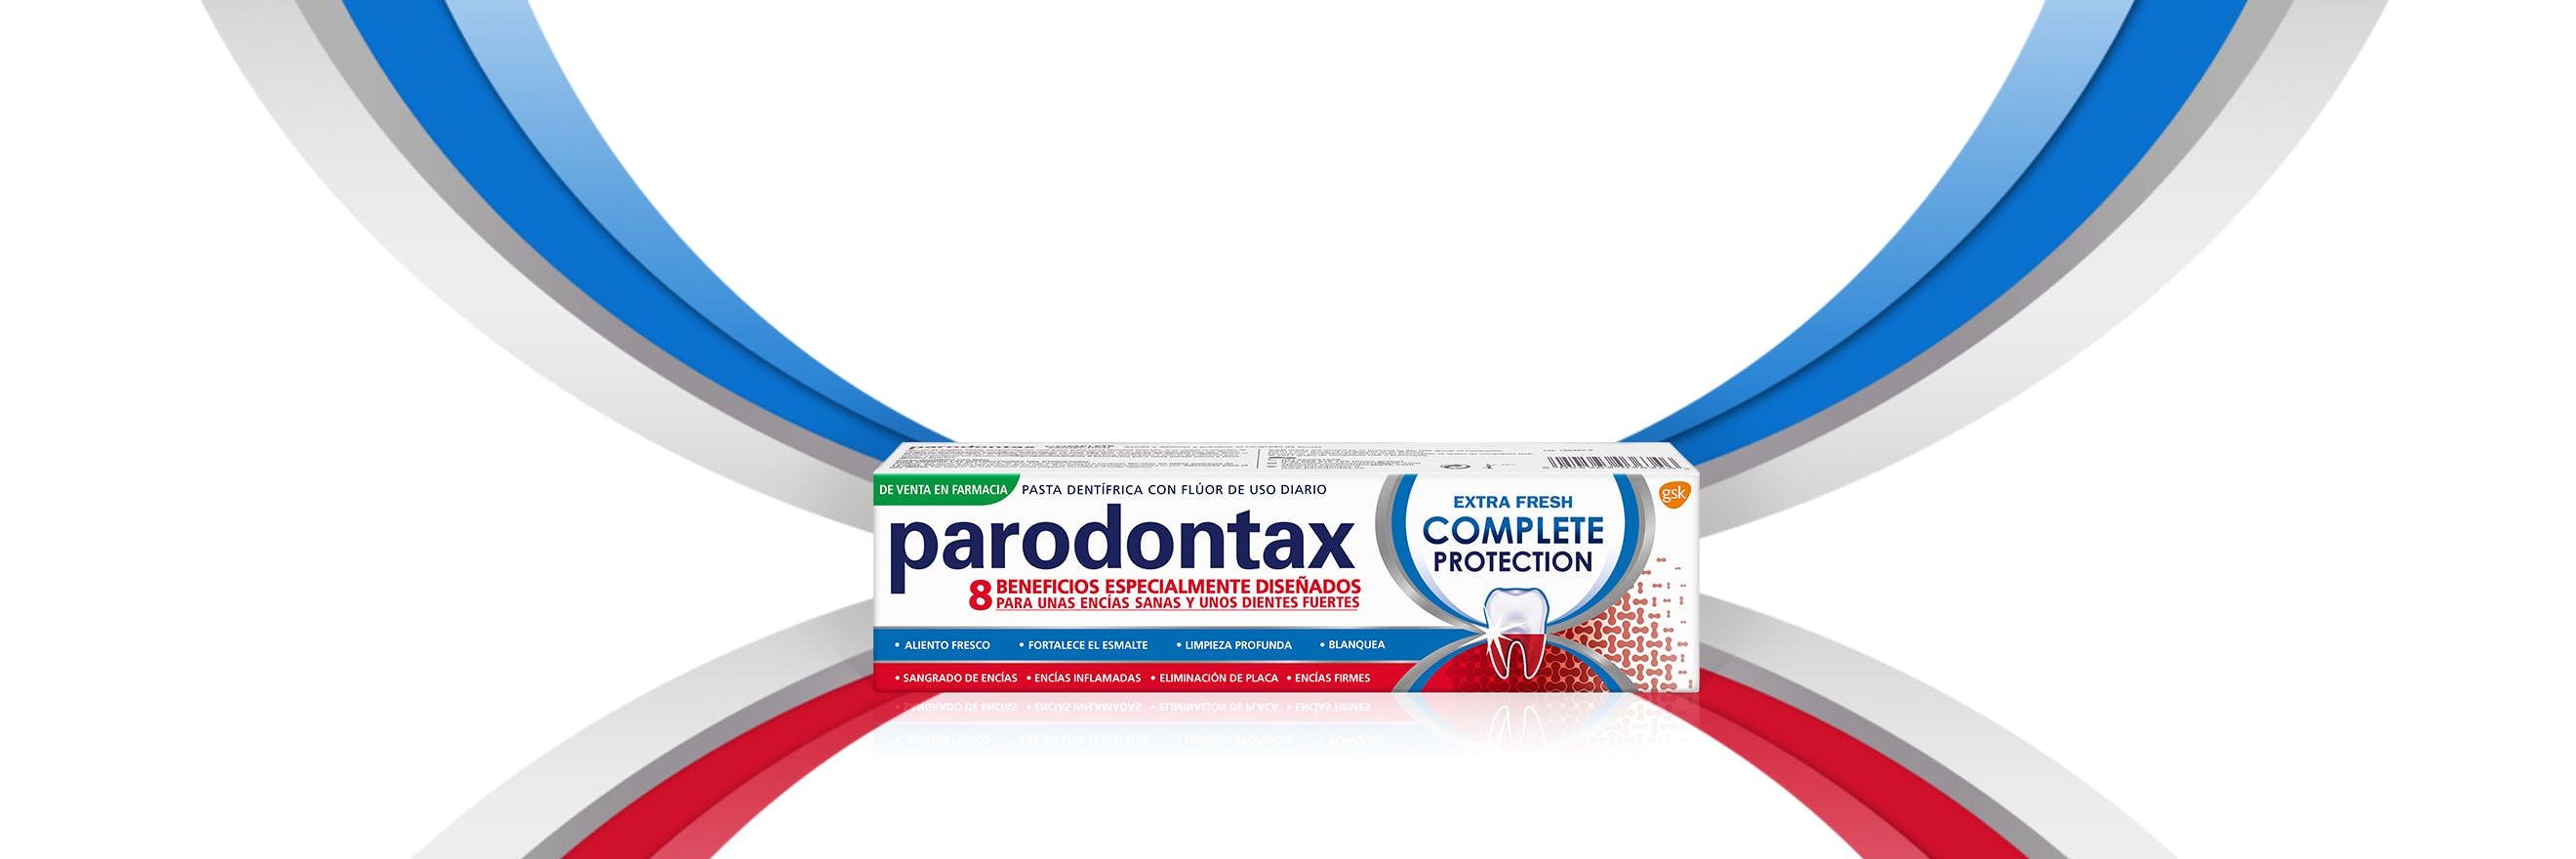 Pasta de dientes Parodontax Complete Protection - Extra Fresh